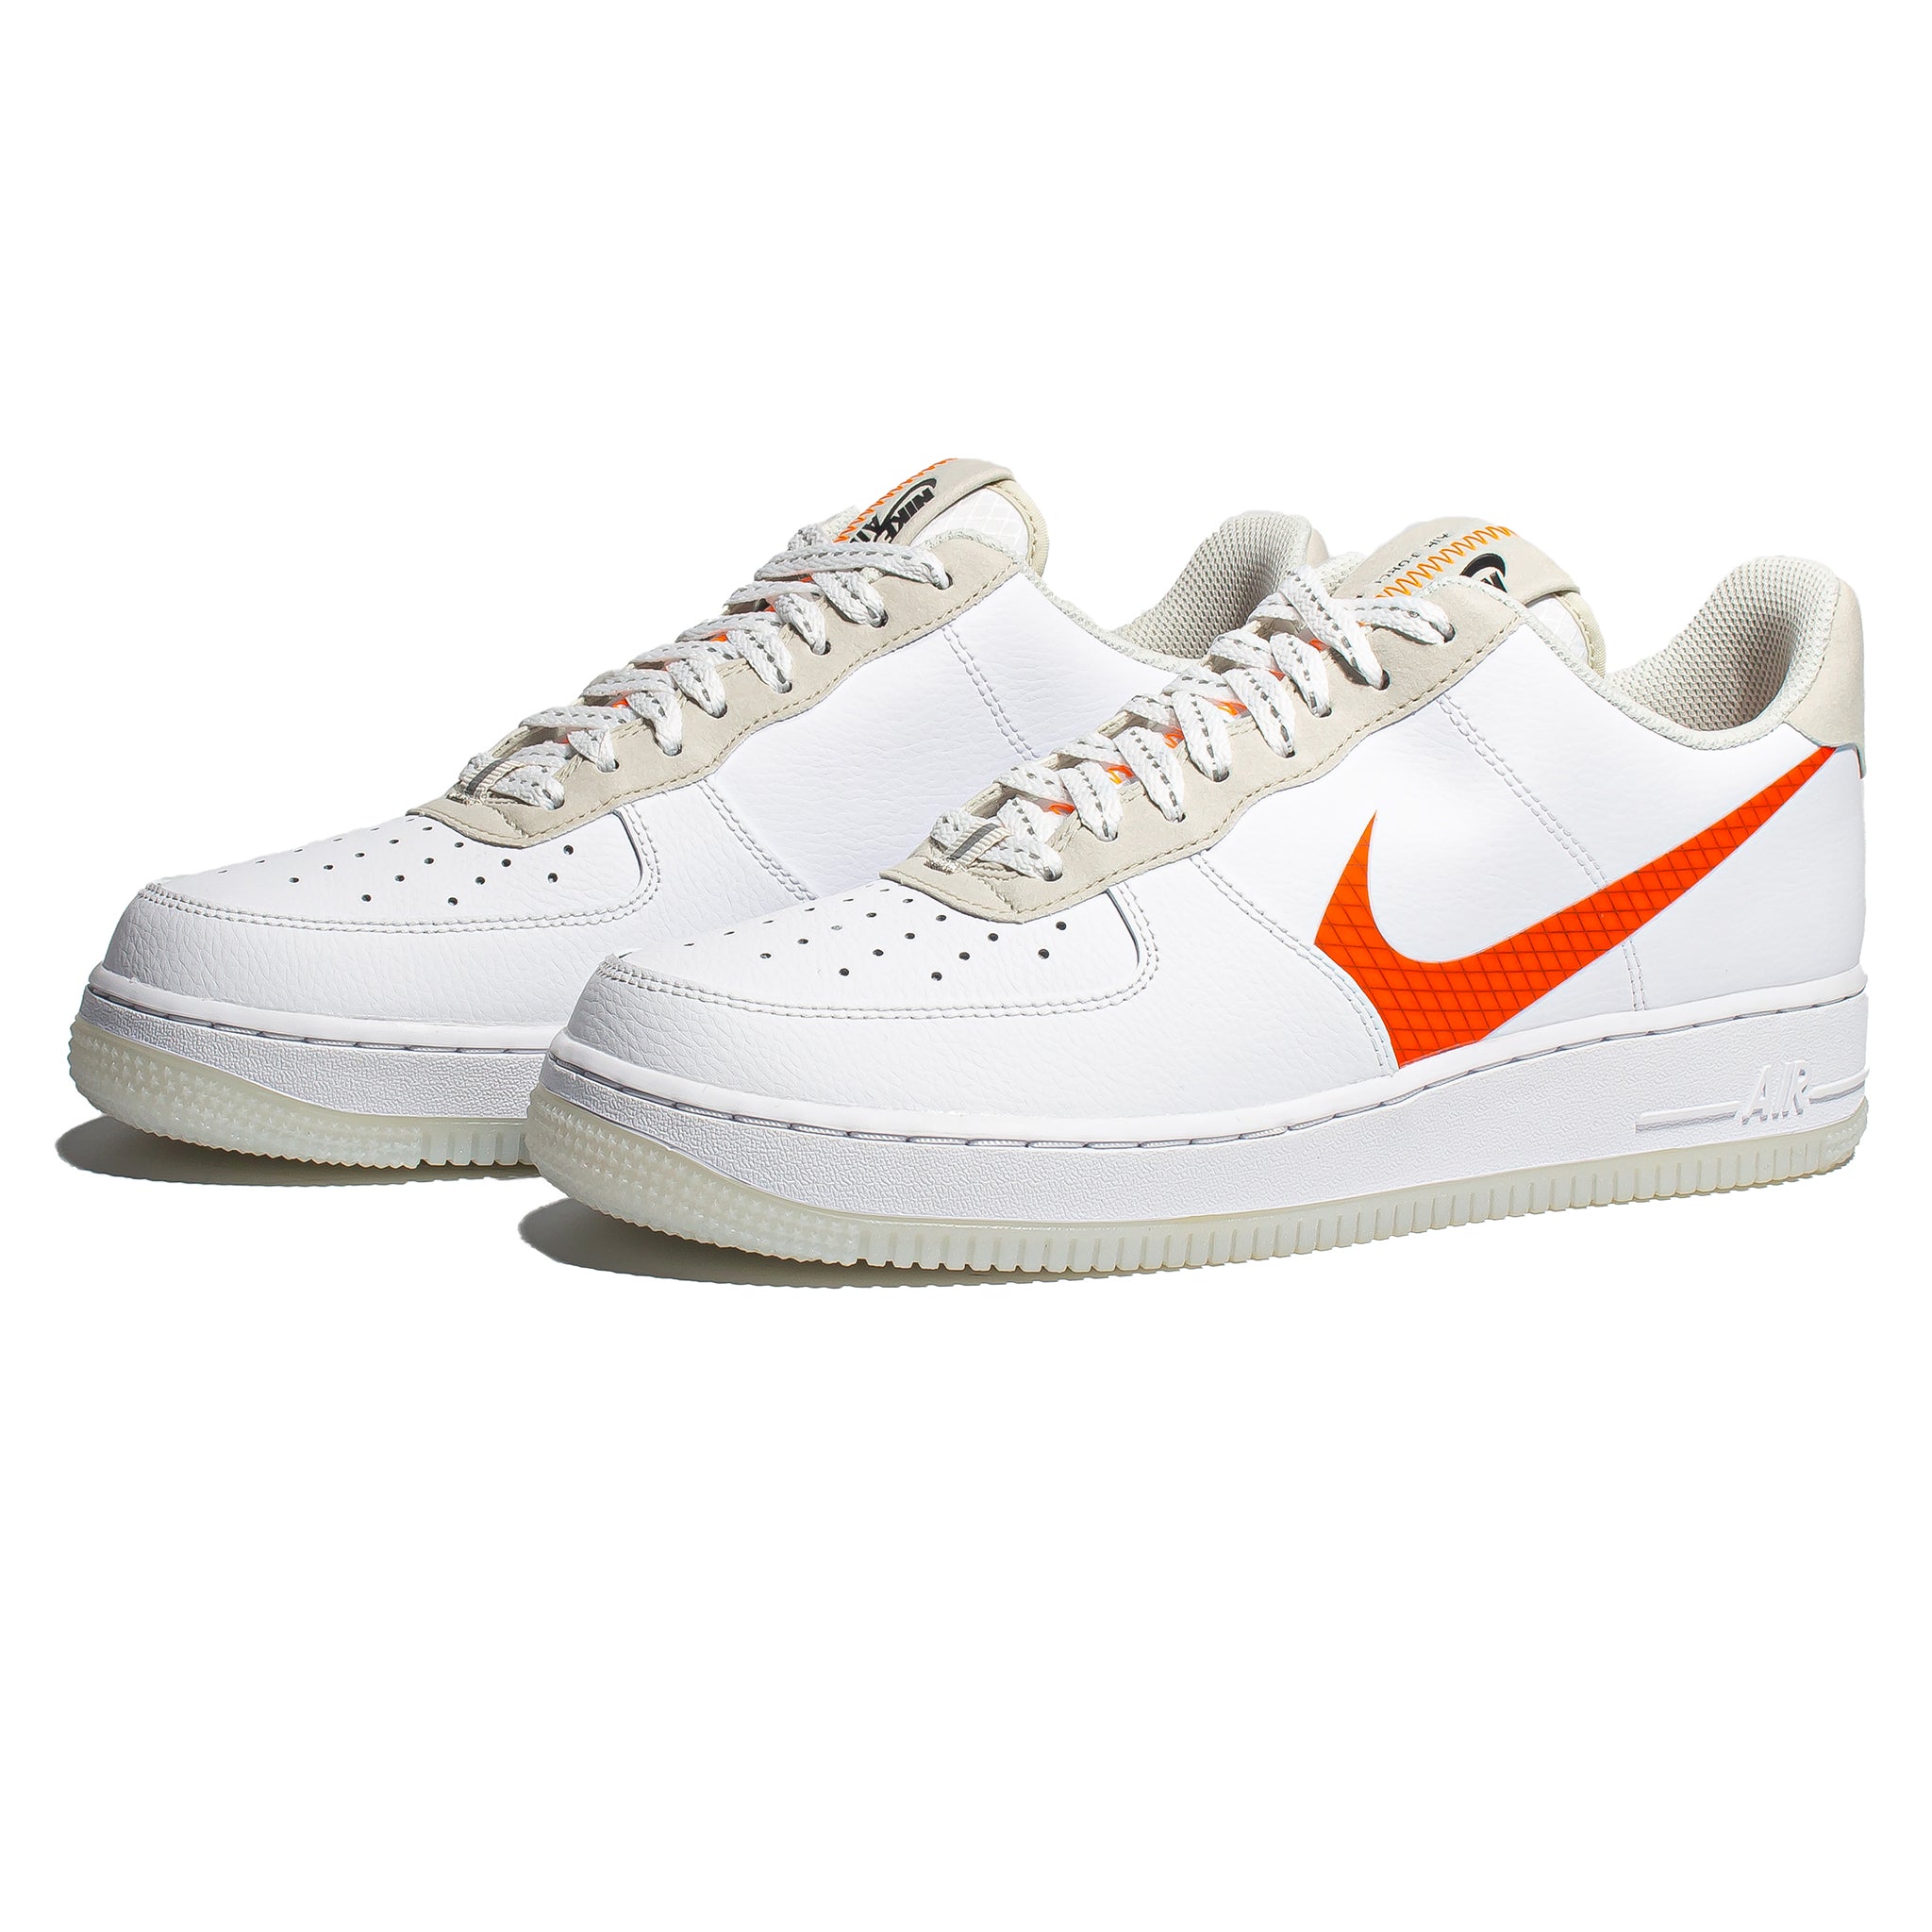 Nike Air Force 1 '07 LV8 3 'White/Total Orange'